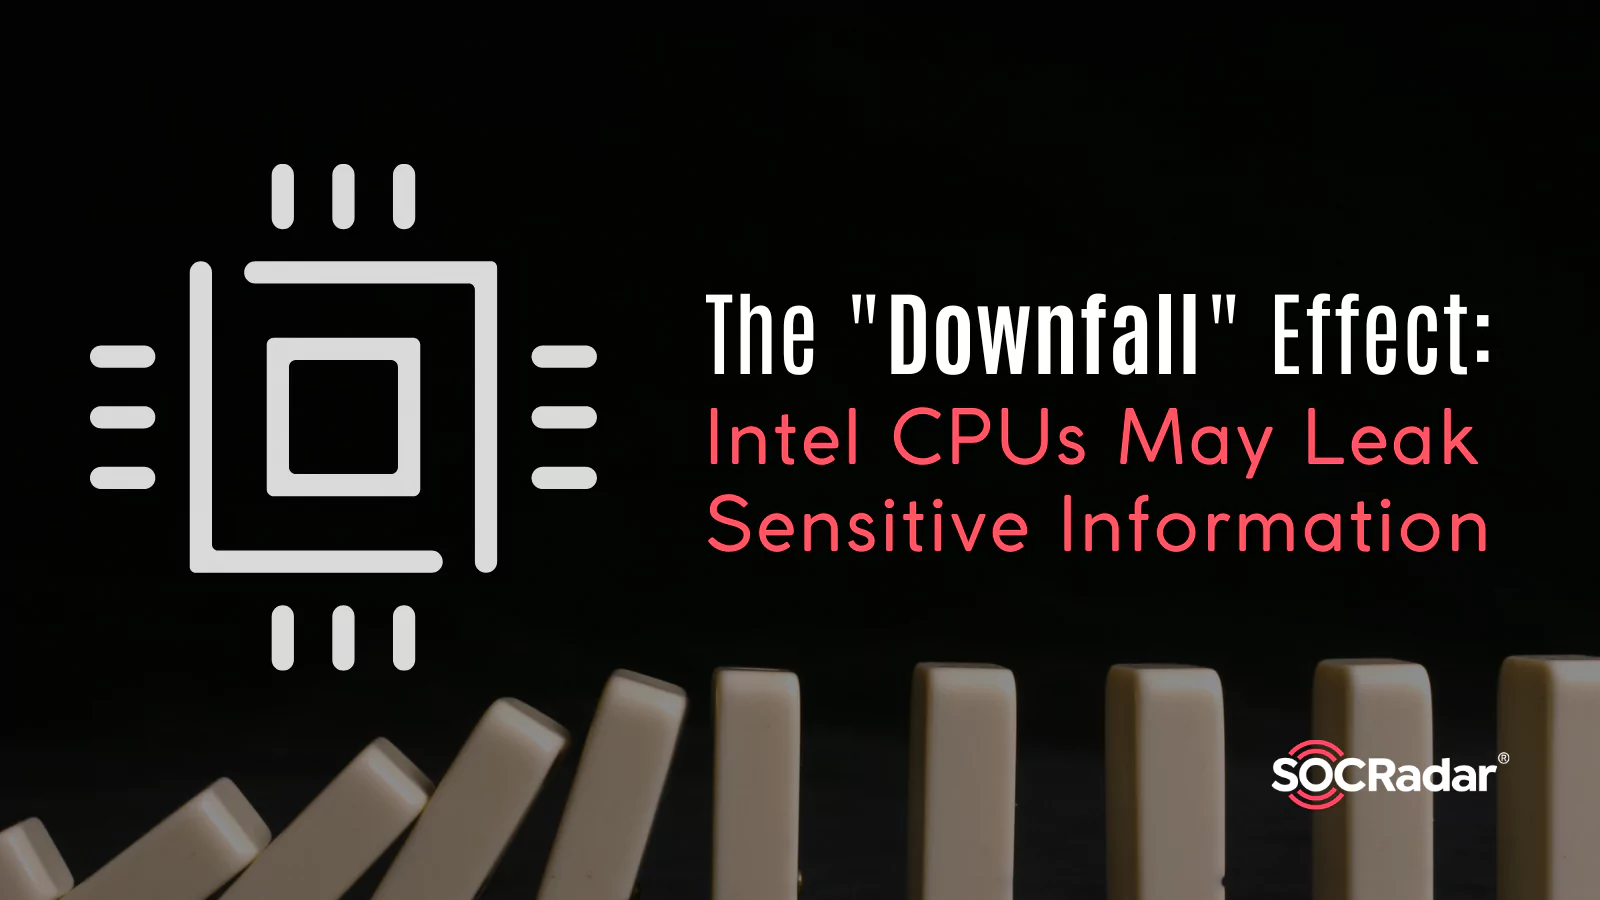 SOCRadar® Cyber Intelligence Inc. | The “Downfall” Effect: Intel CPUs May Leak Sensitive Information